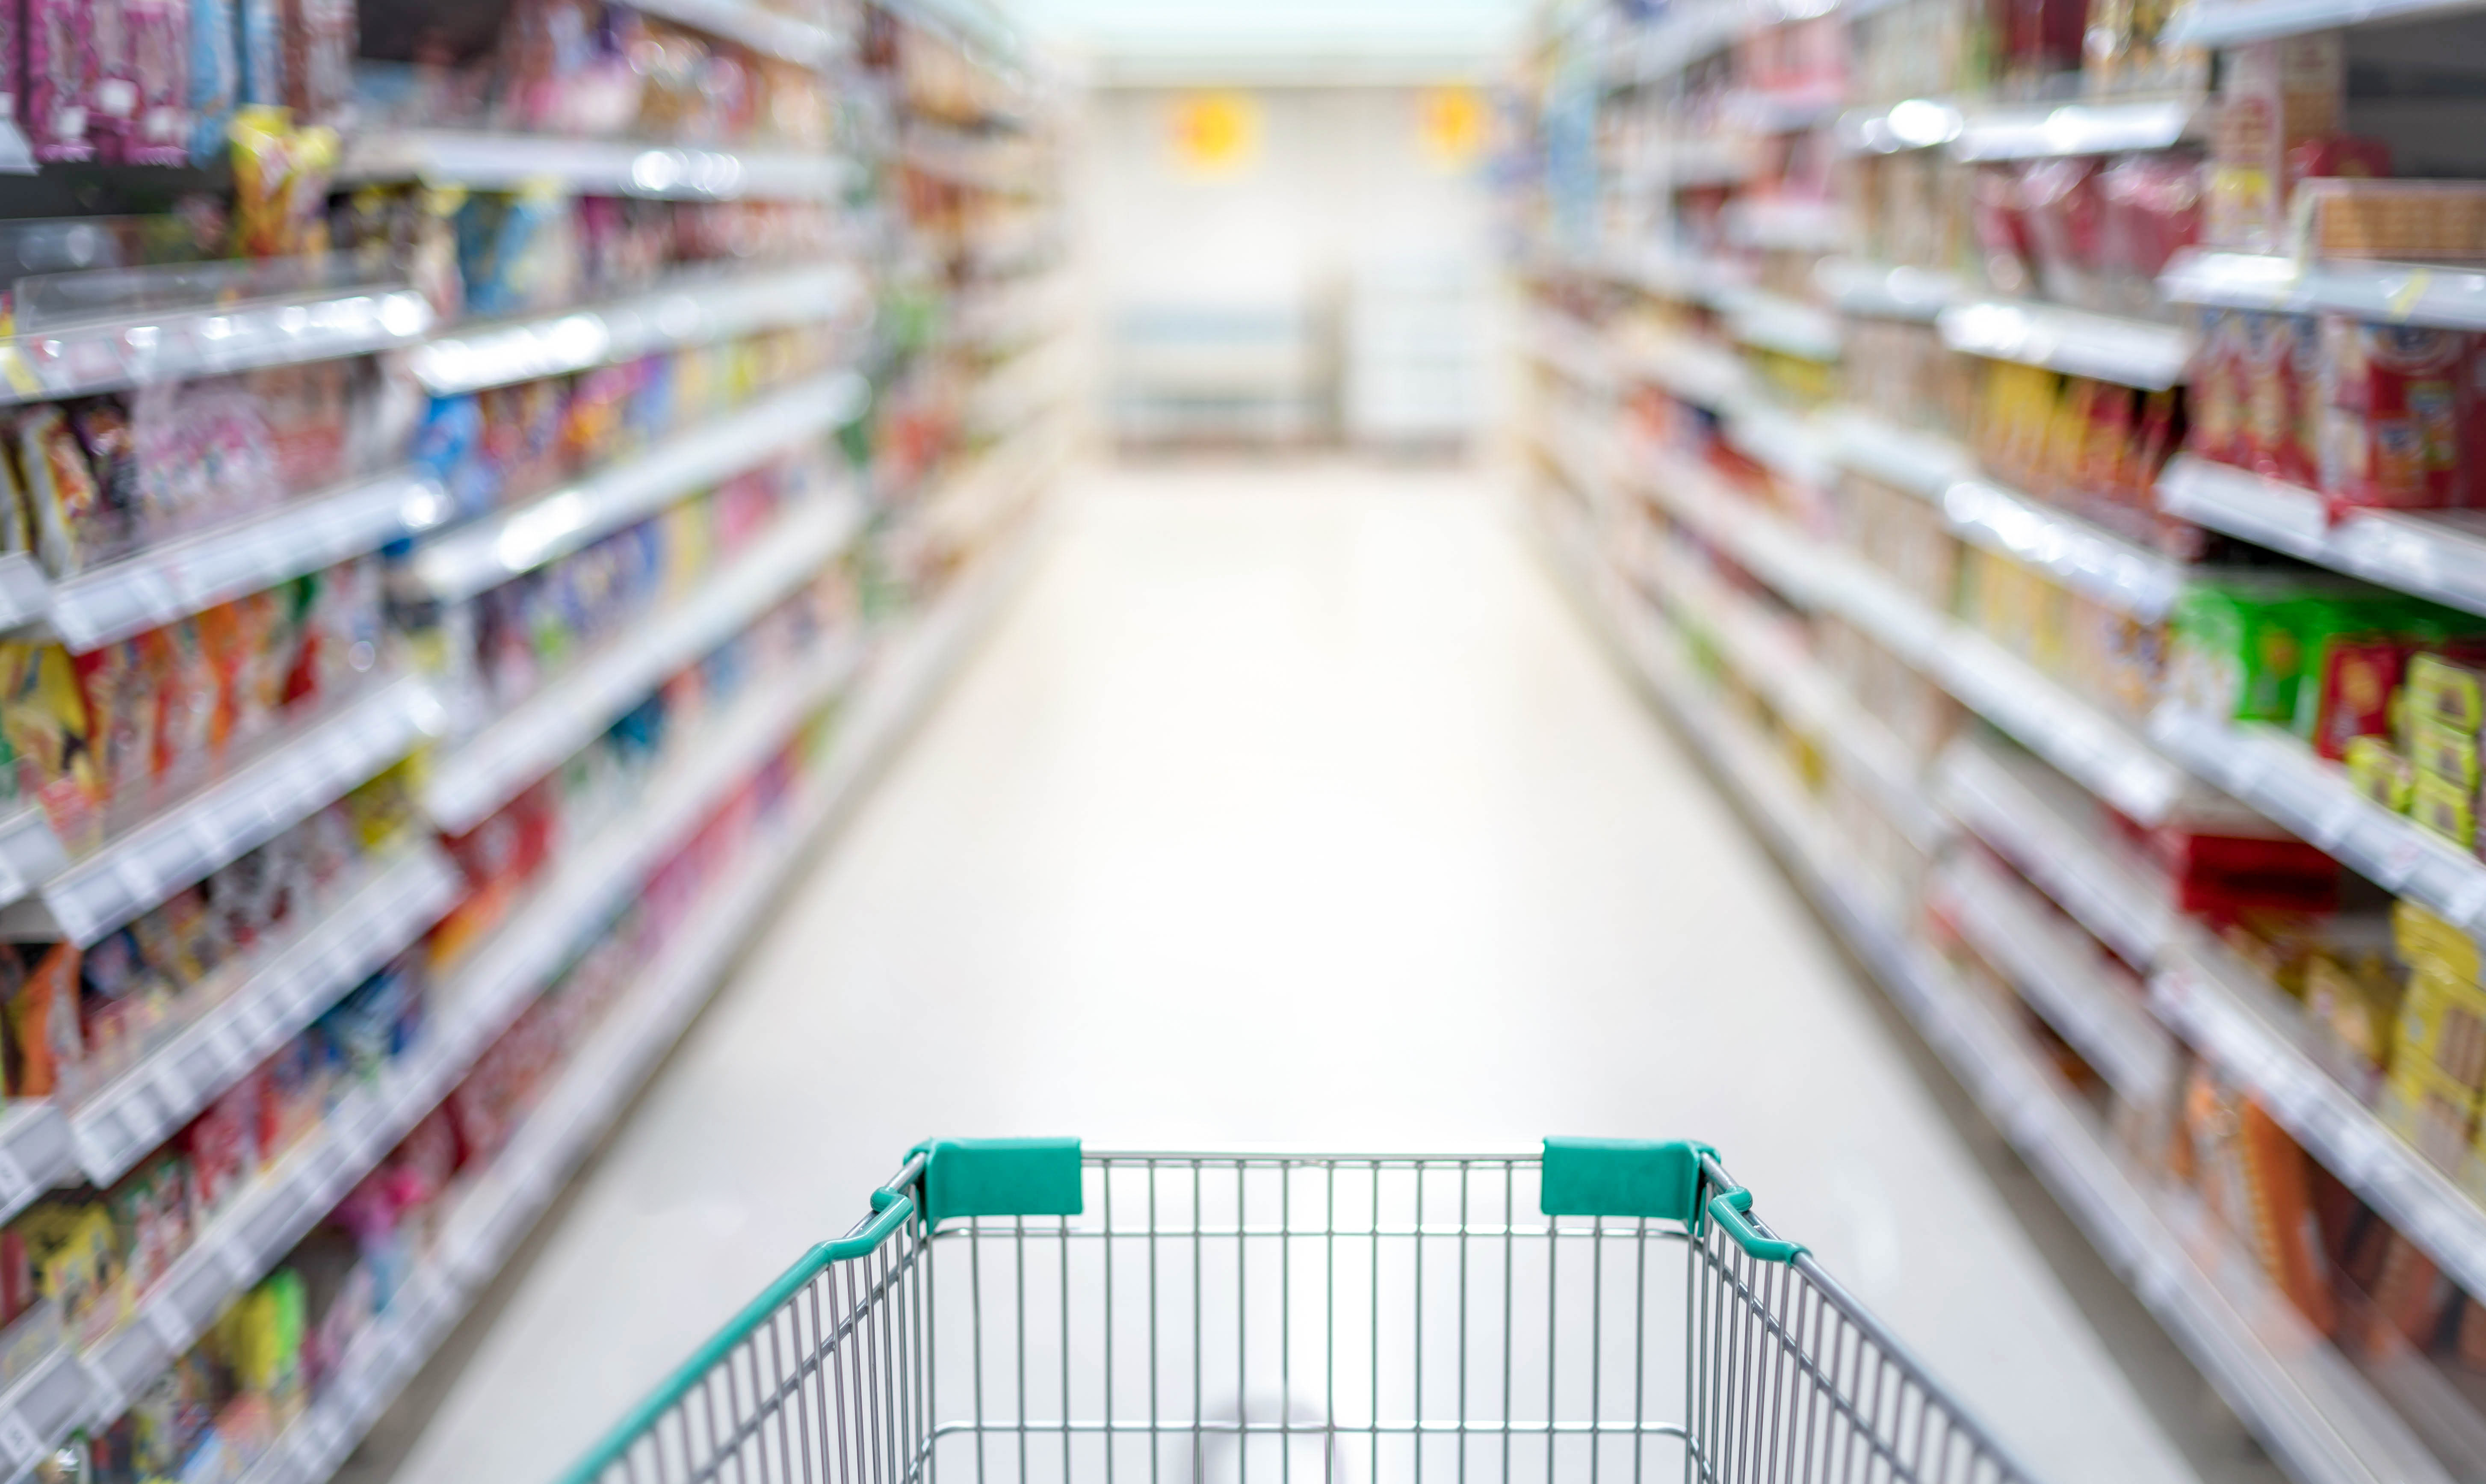 Un pasillo de supermercado | Fuente: Shutterstock